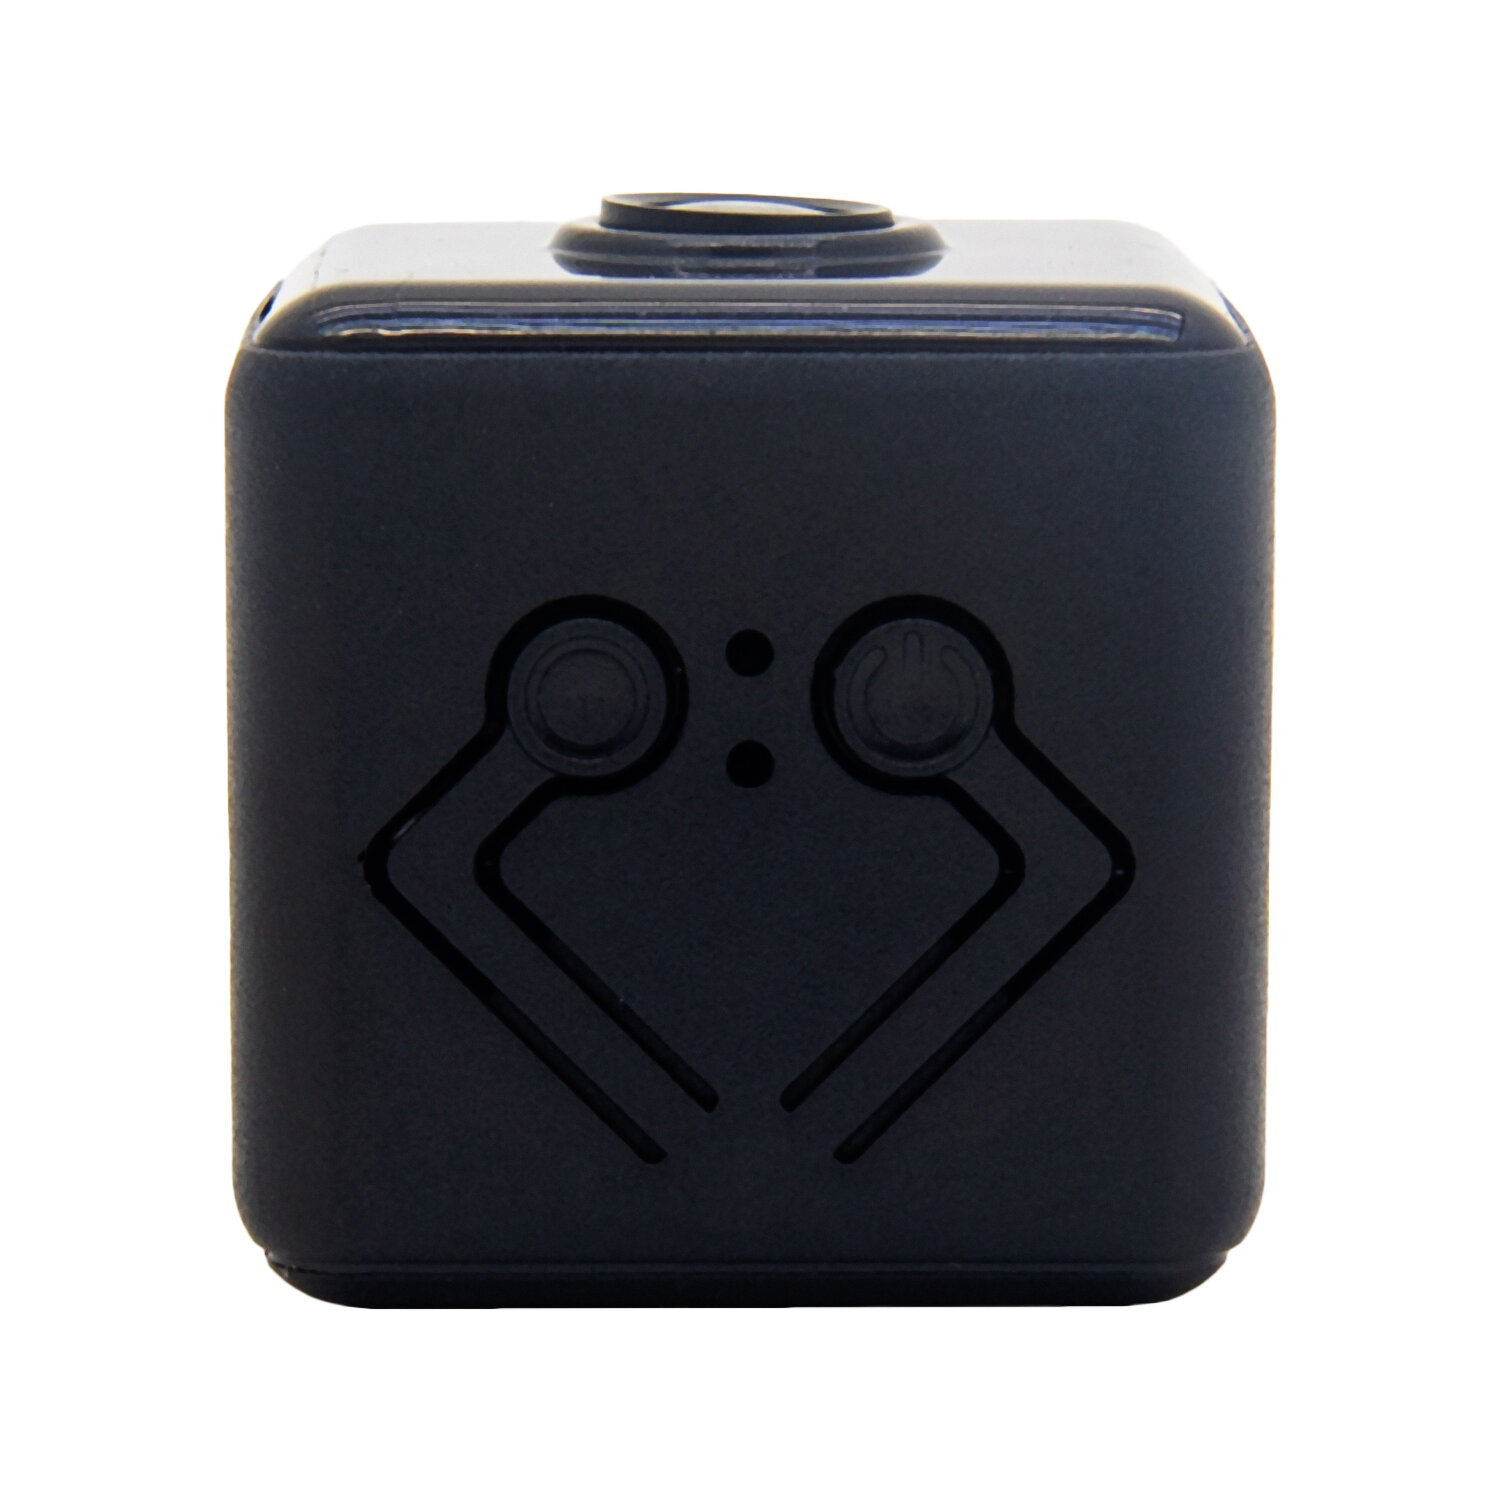 Мини камера Cube X6D (Wi-Fi 640х480)